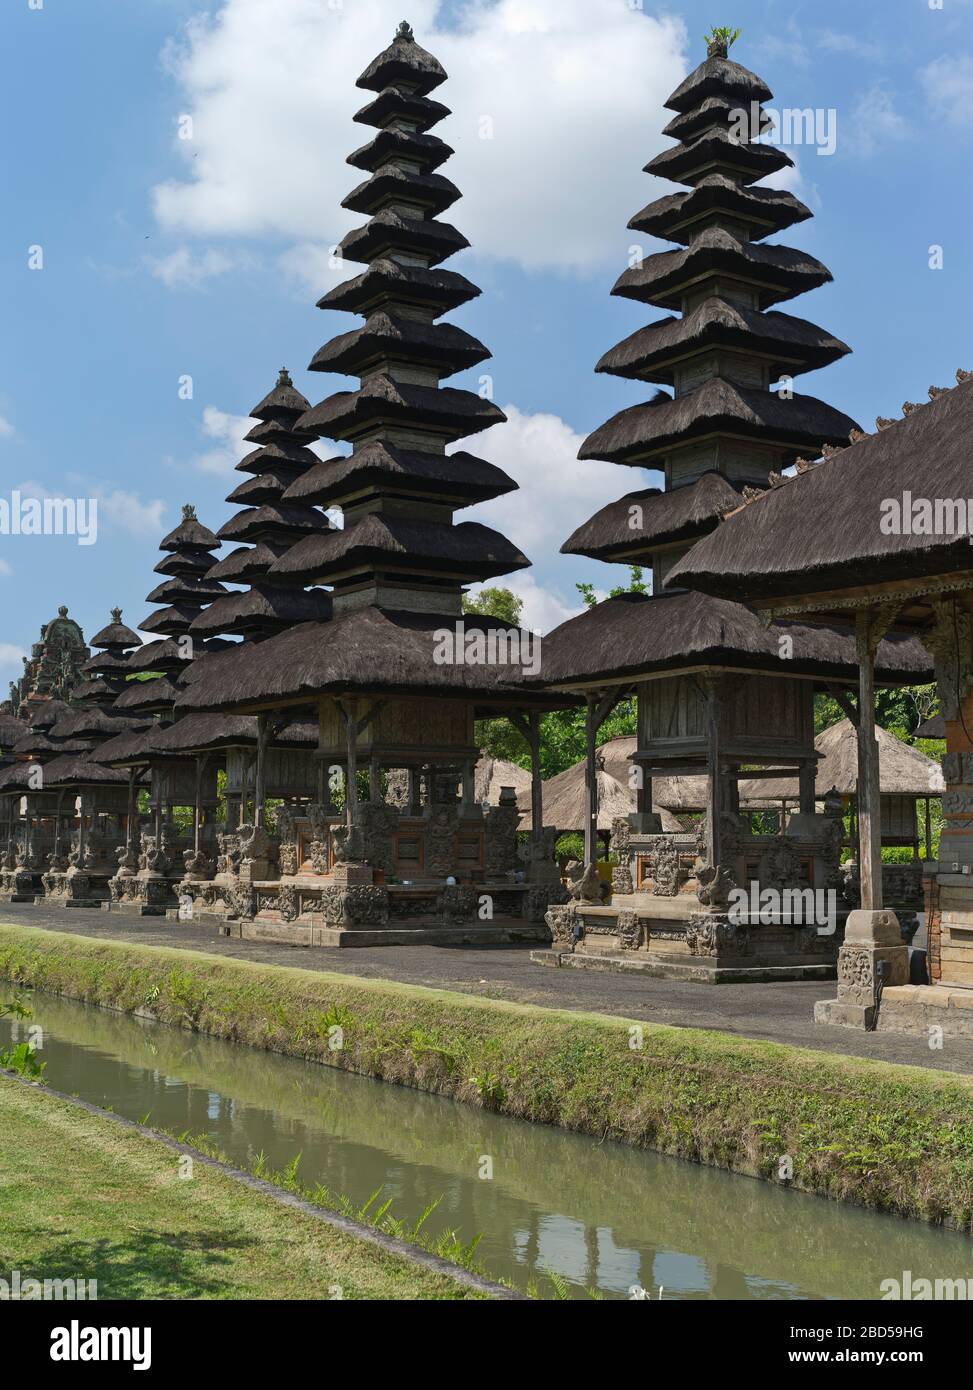 dh pura Taman Ayun Royal Temple BALI INDONESIA Balinese Hindu Mengwi tempie interno sanctum pelinggih meru torri santuari Foto Stock